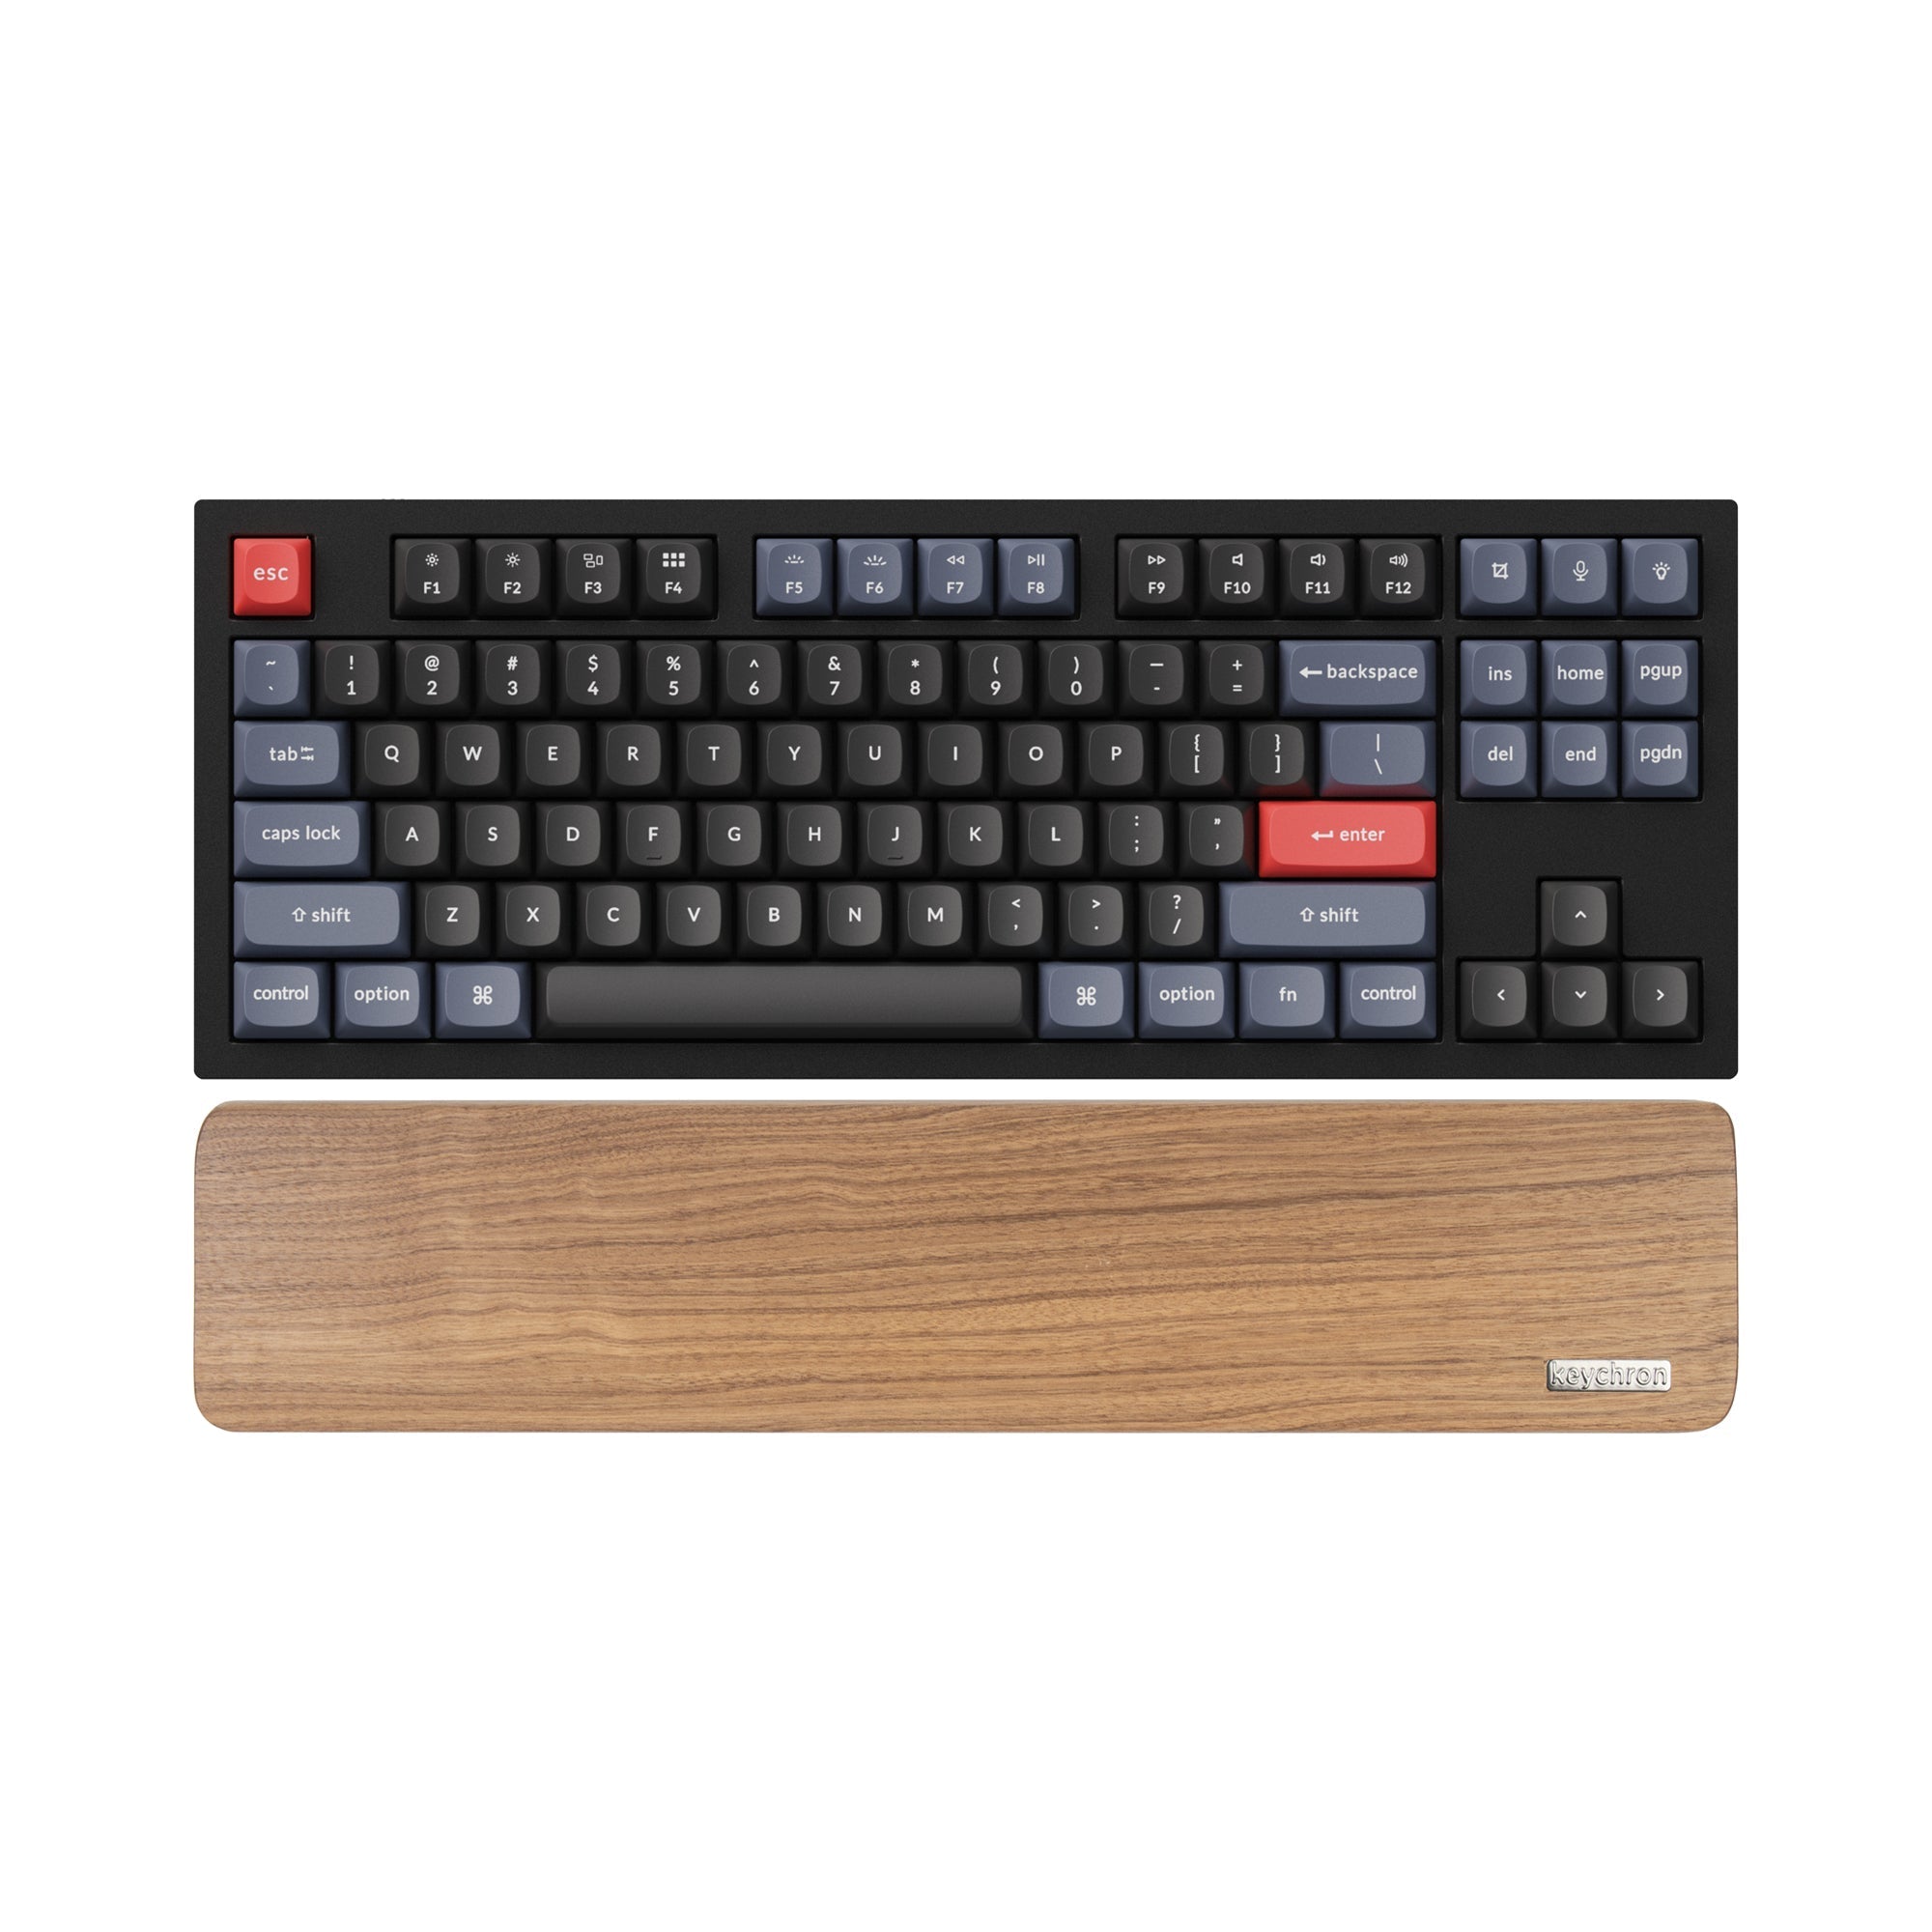 Keychron wooden palm rest for q3 keyboard